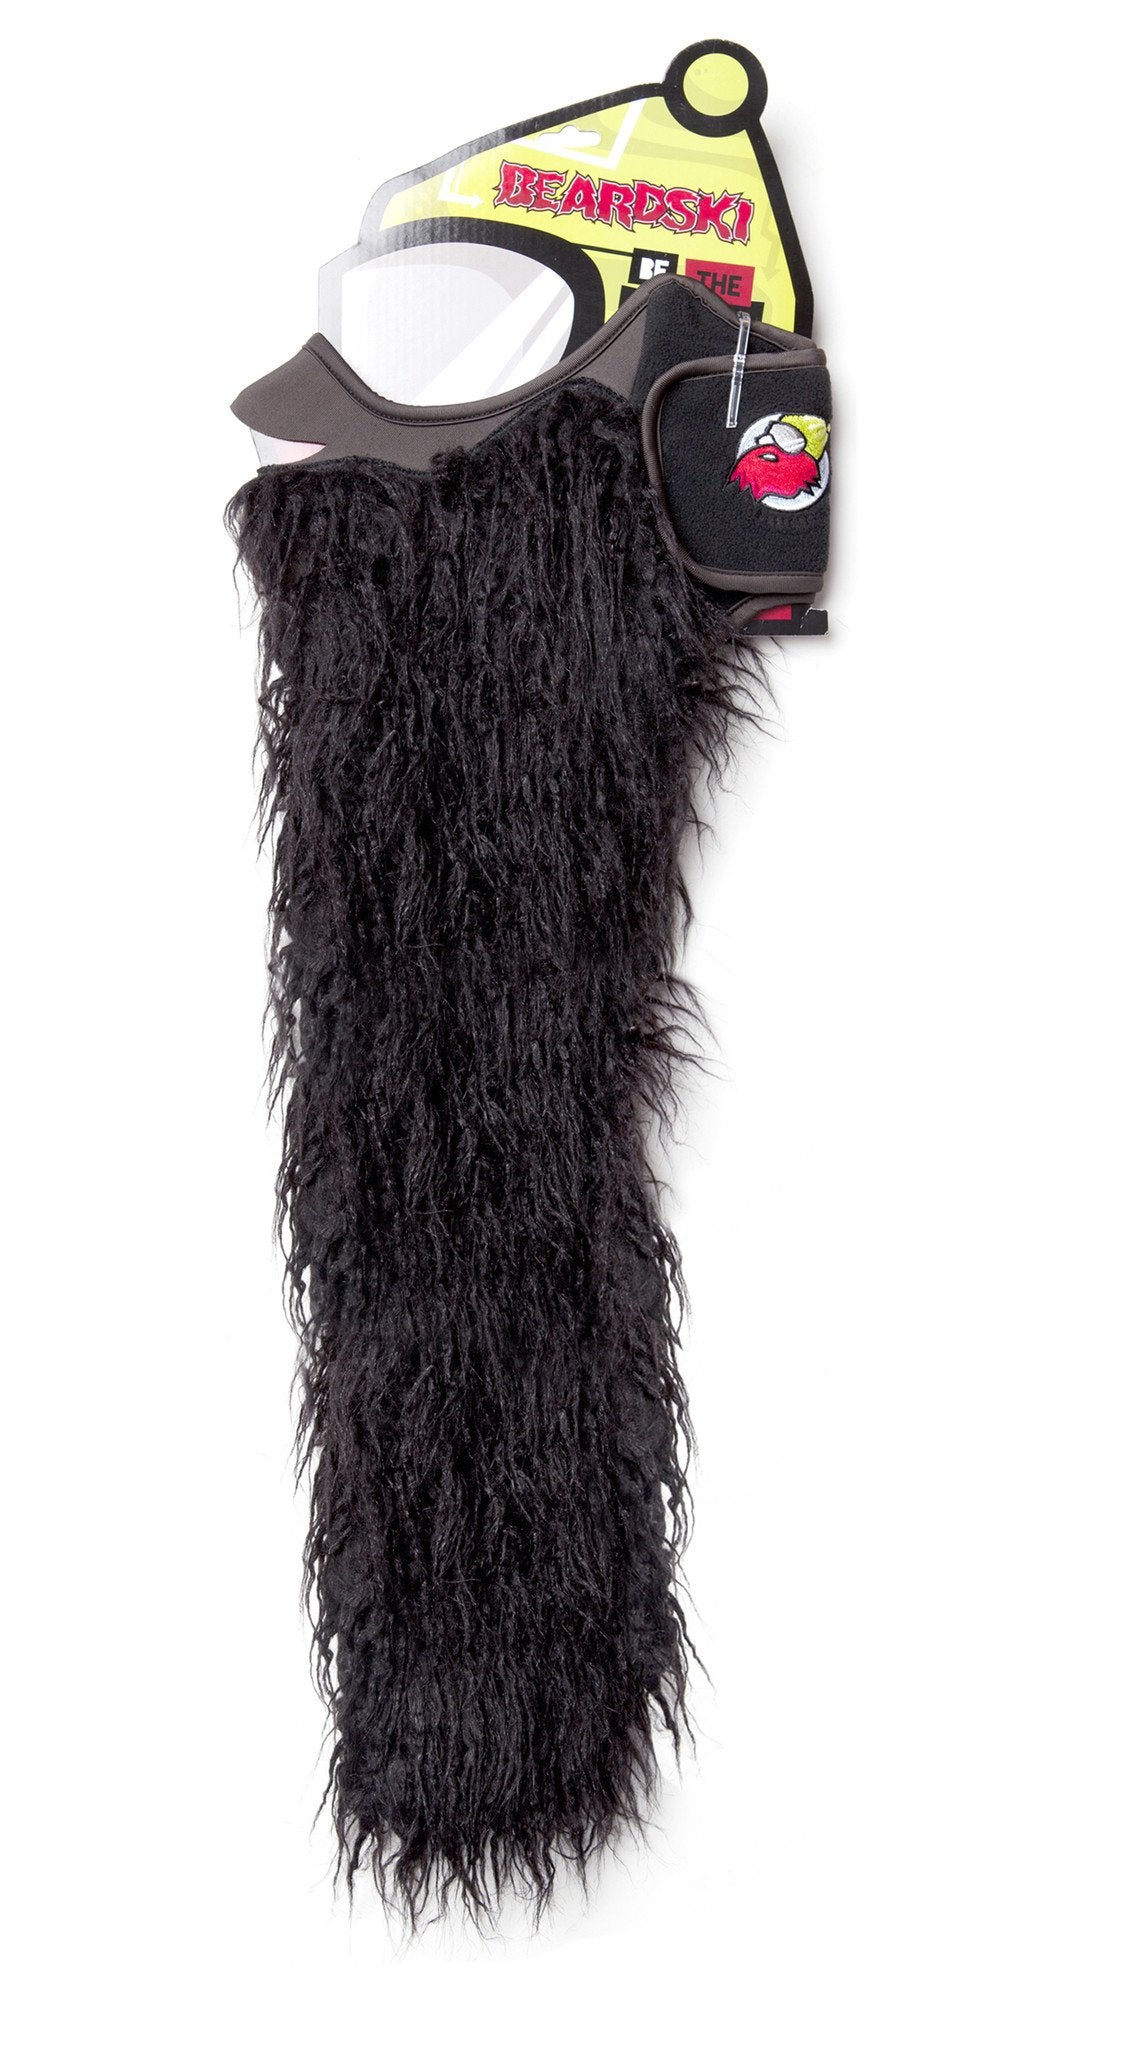 Beardski Black Pearl Long Black Bearded Ski Mask